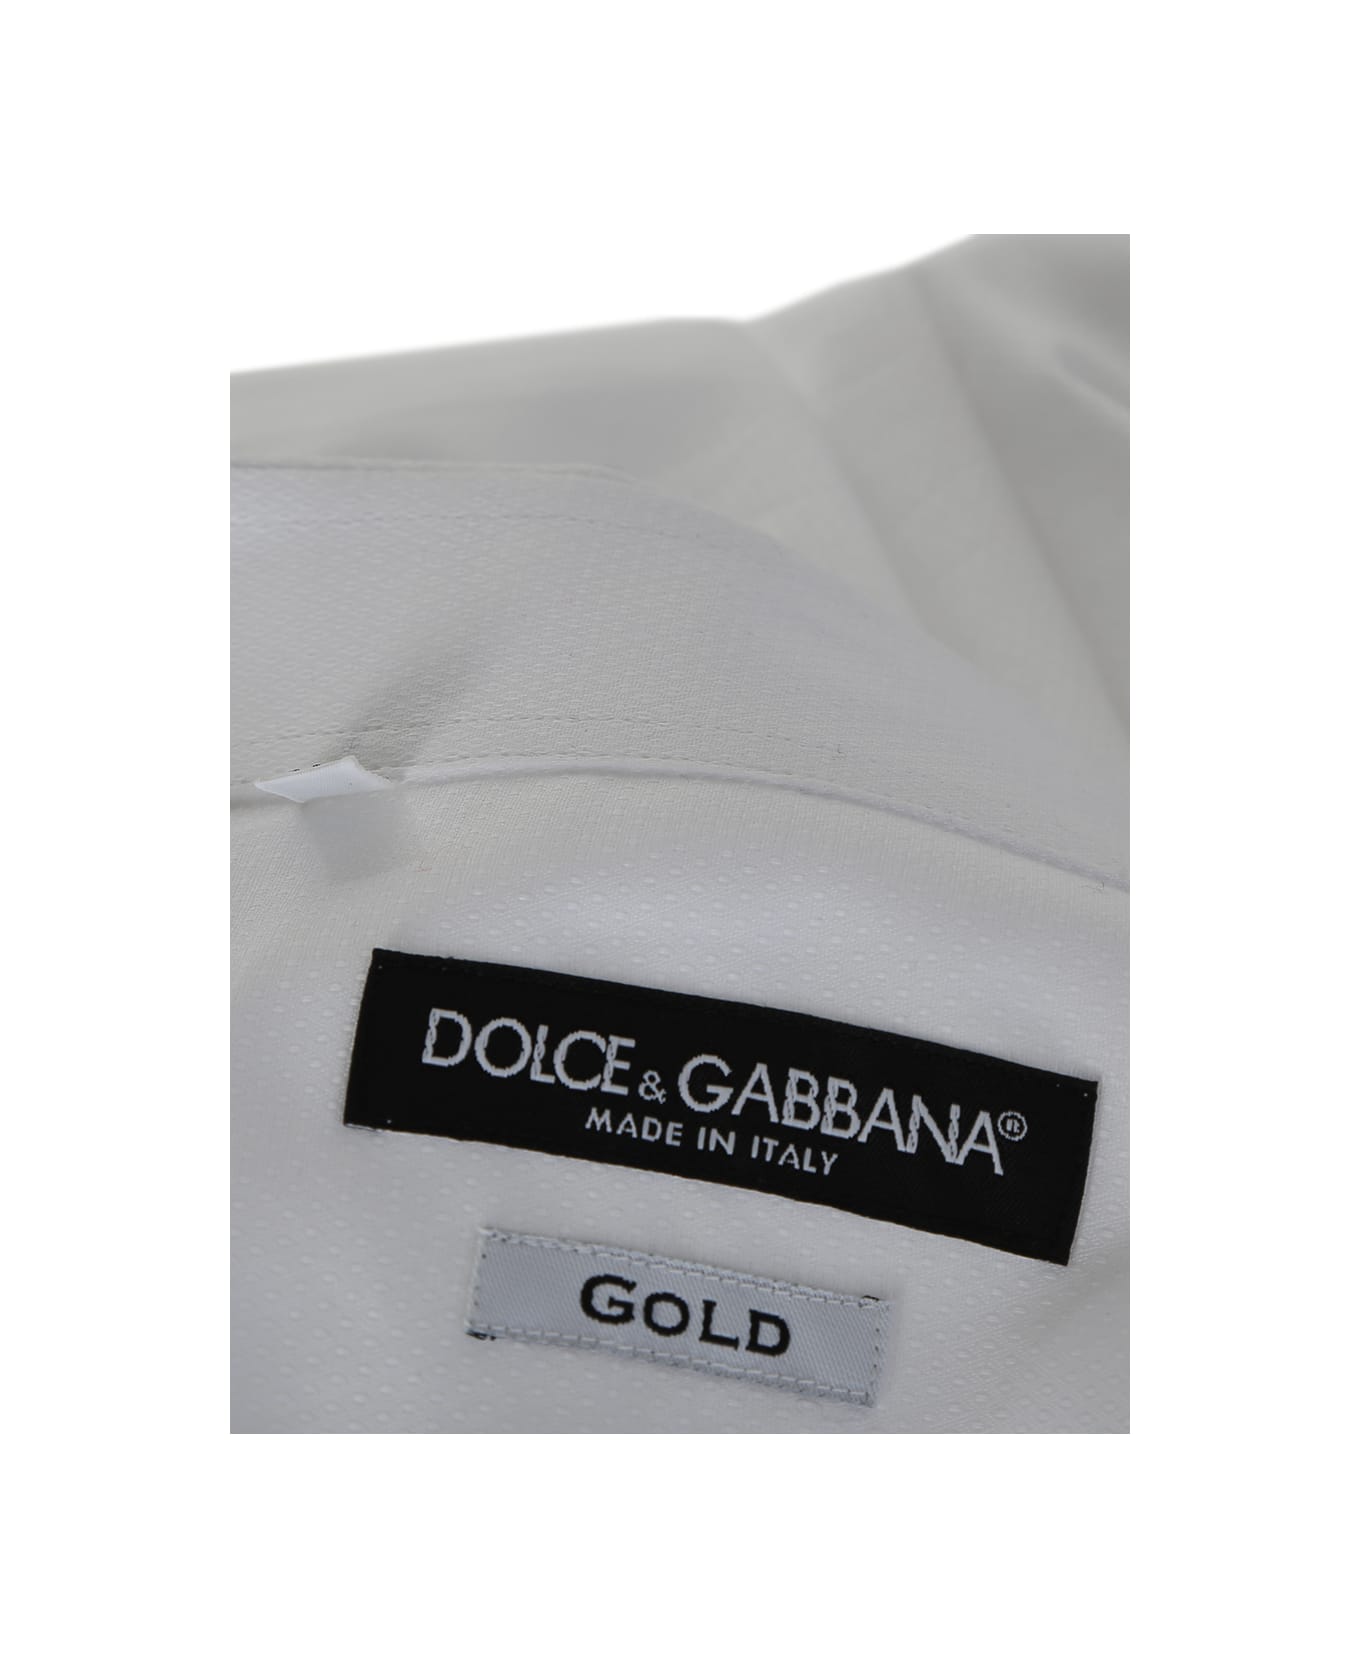 Dolce & Gabbana Textured Cotton Shirt - White